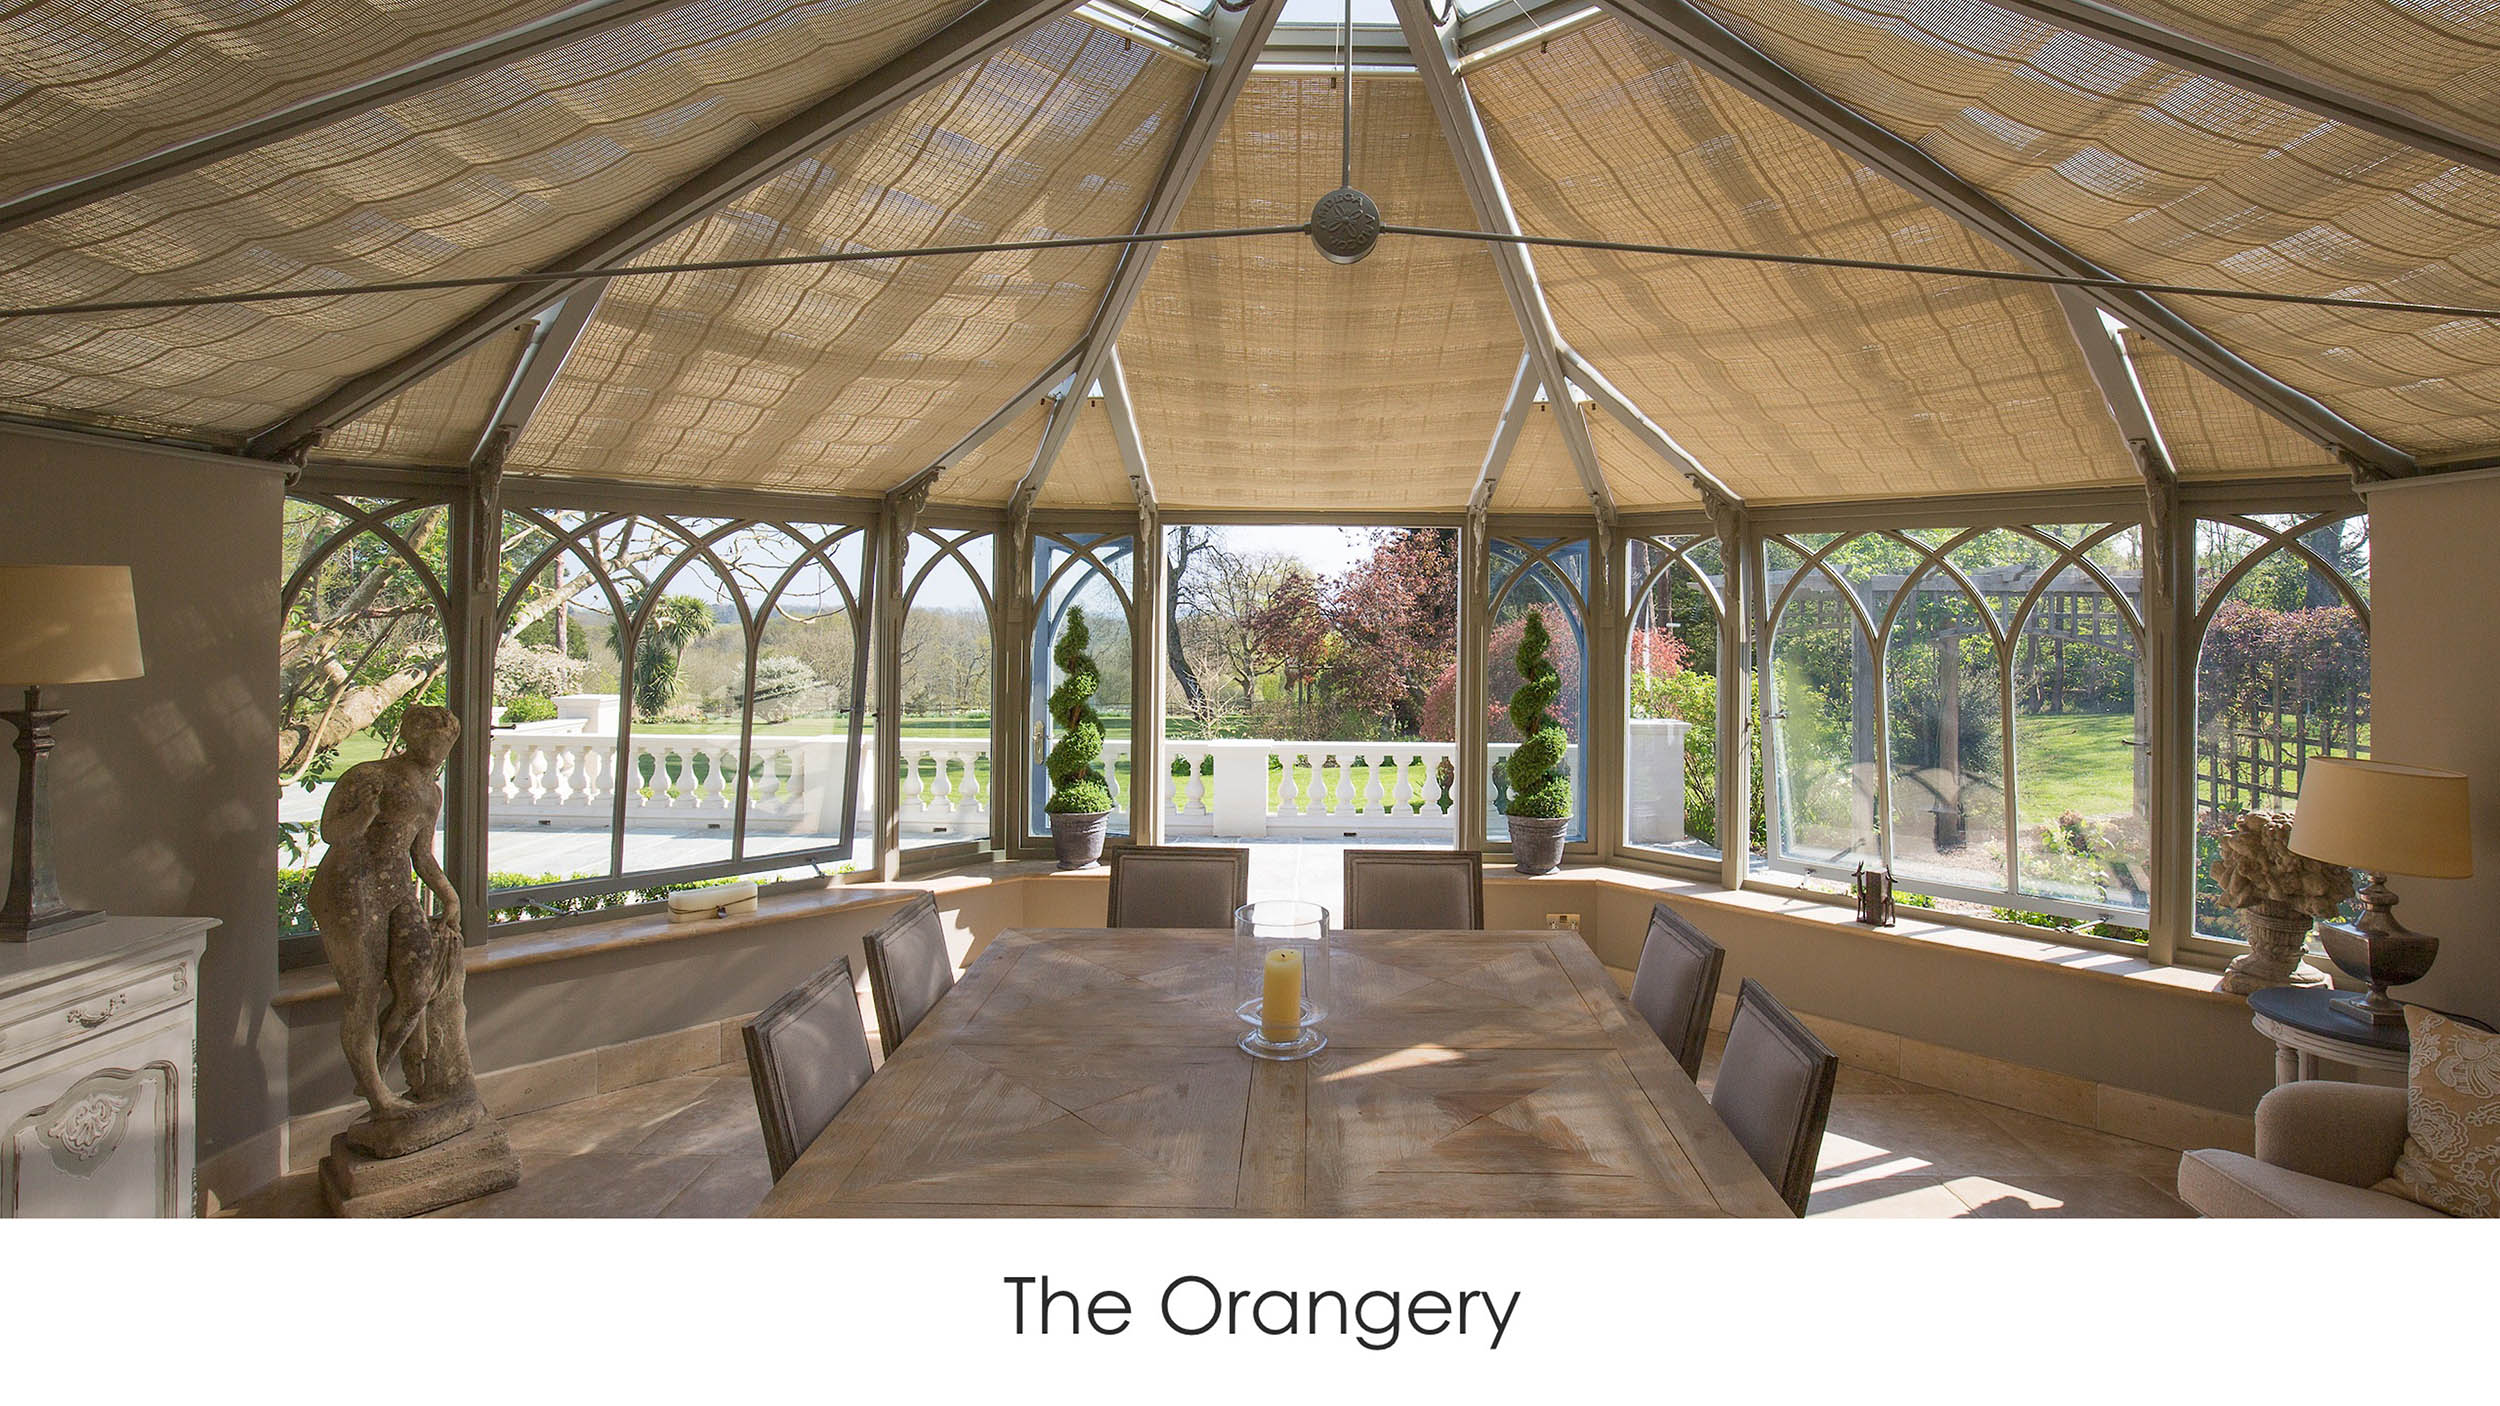 The Orangery - Pennybridge House - Real Estate Development Projects by Gabriella Atkinson.